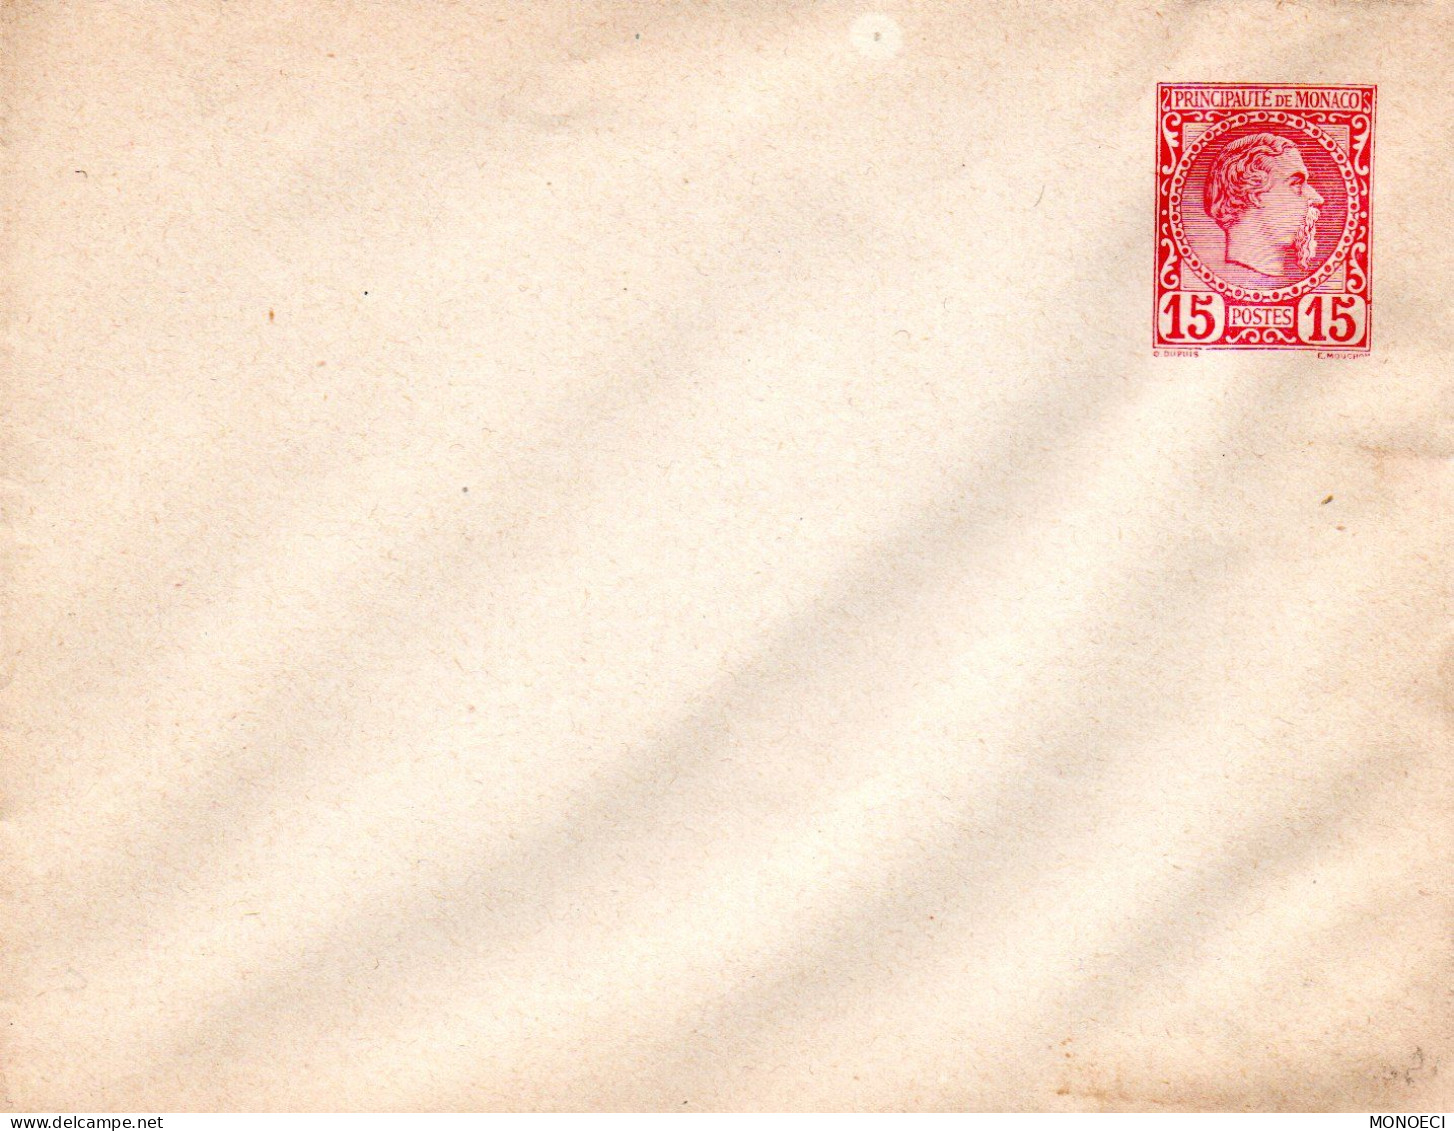 MONACO -- MONTE CARLO -- ENTIER POSTAL -- Enveloppe -- 15 C. (1886) (123 X 96) Prince Charles III - Enteros  Postales